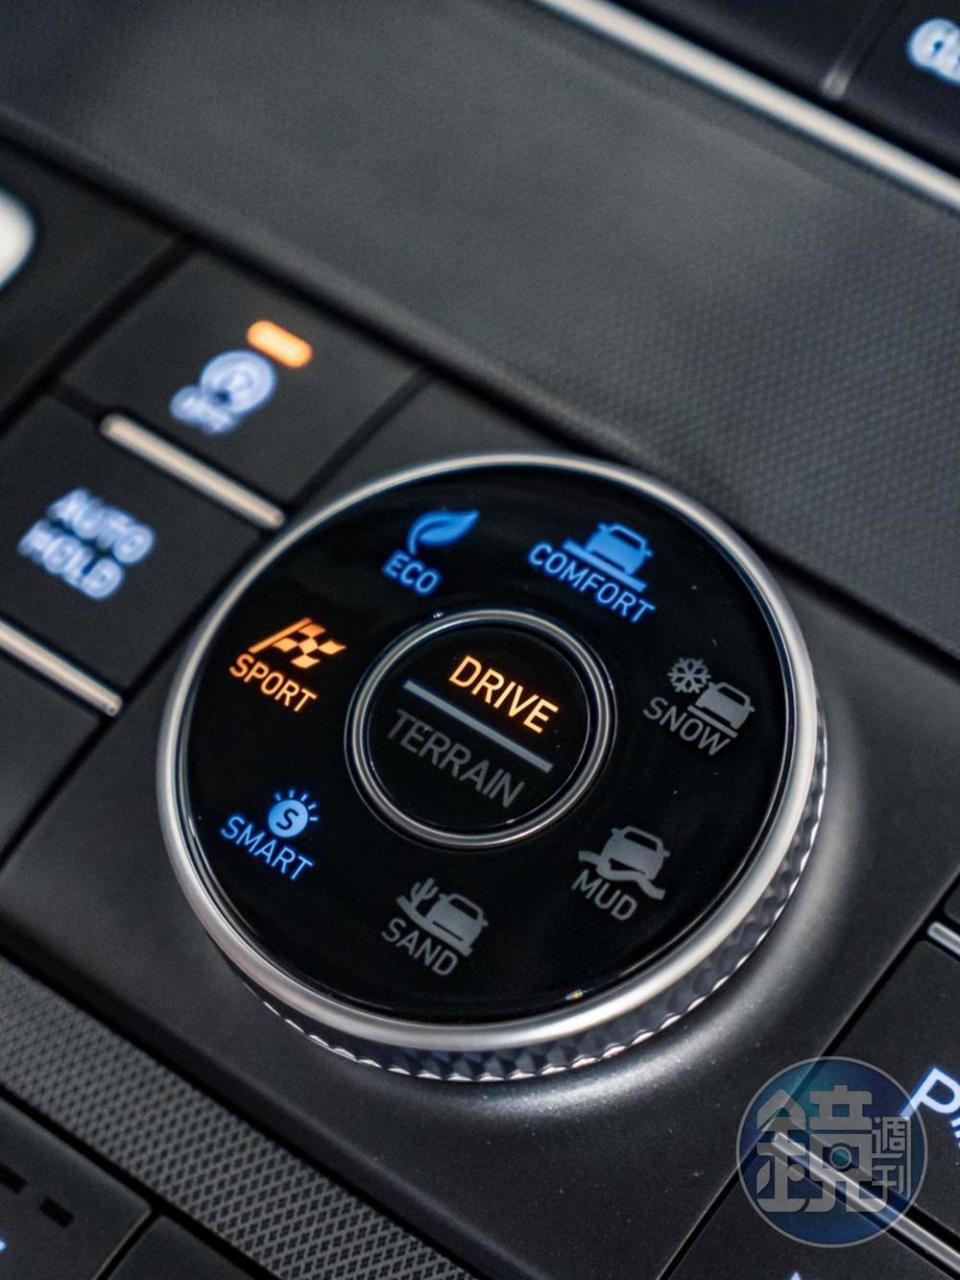 Drive Mode 可變行車駕馭系統，內含Comfort舒適/Eco節能/Sport運動/Smart智慧等4種駕駛模式（左），以及Terrain Mode地形行車駕馭系統（右）。